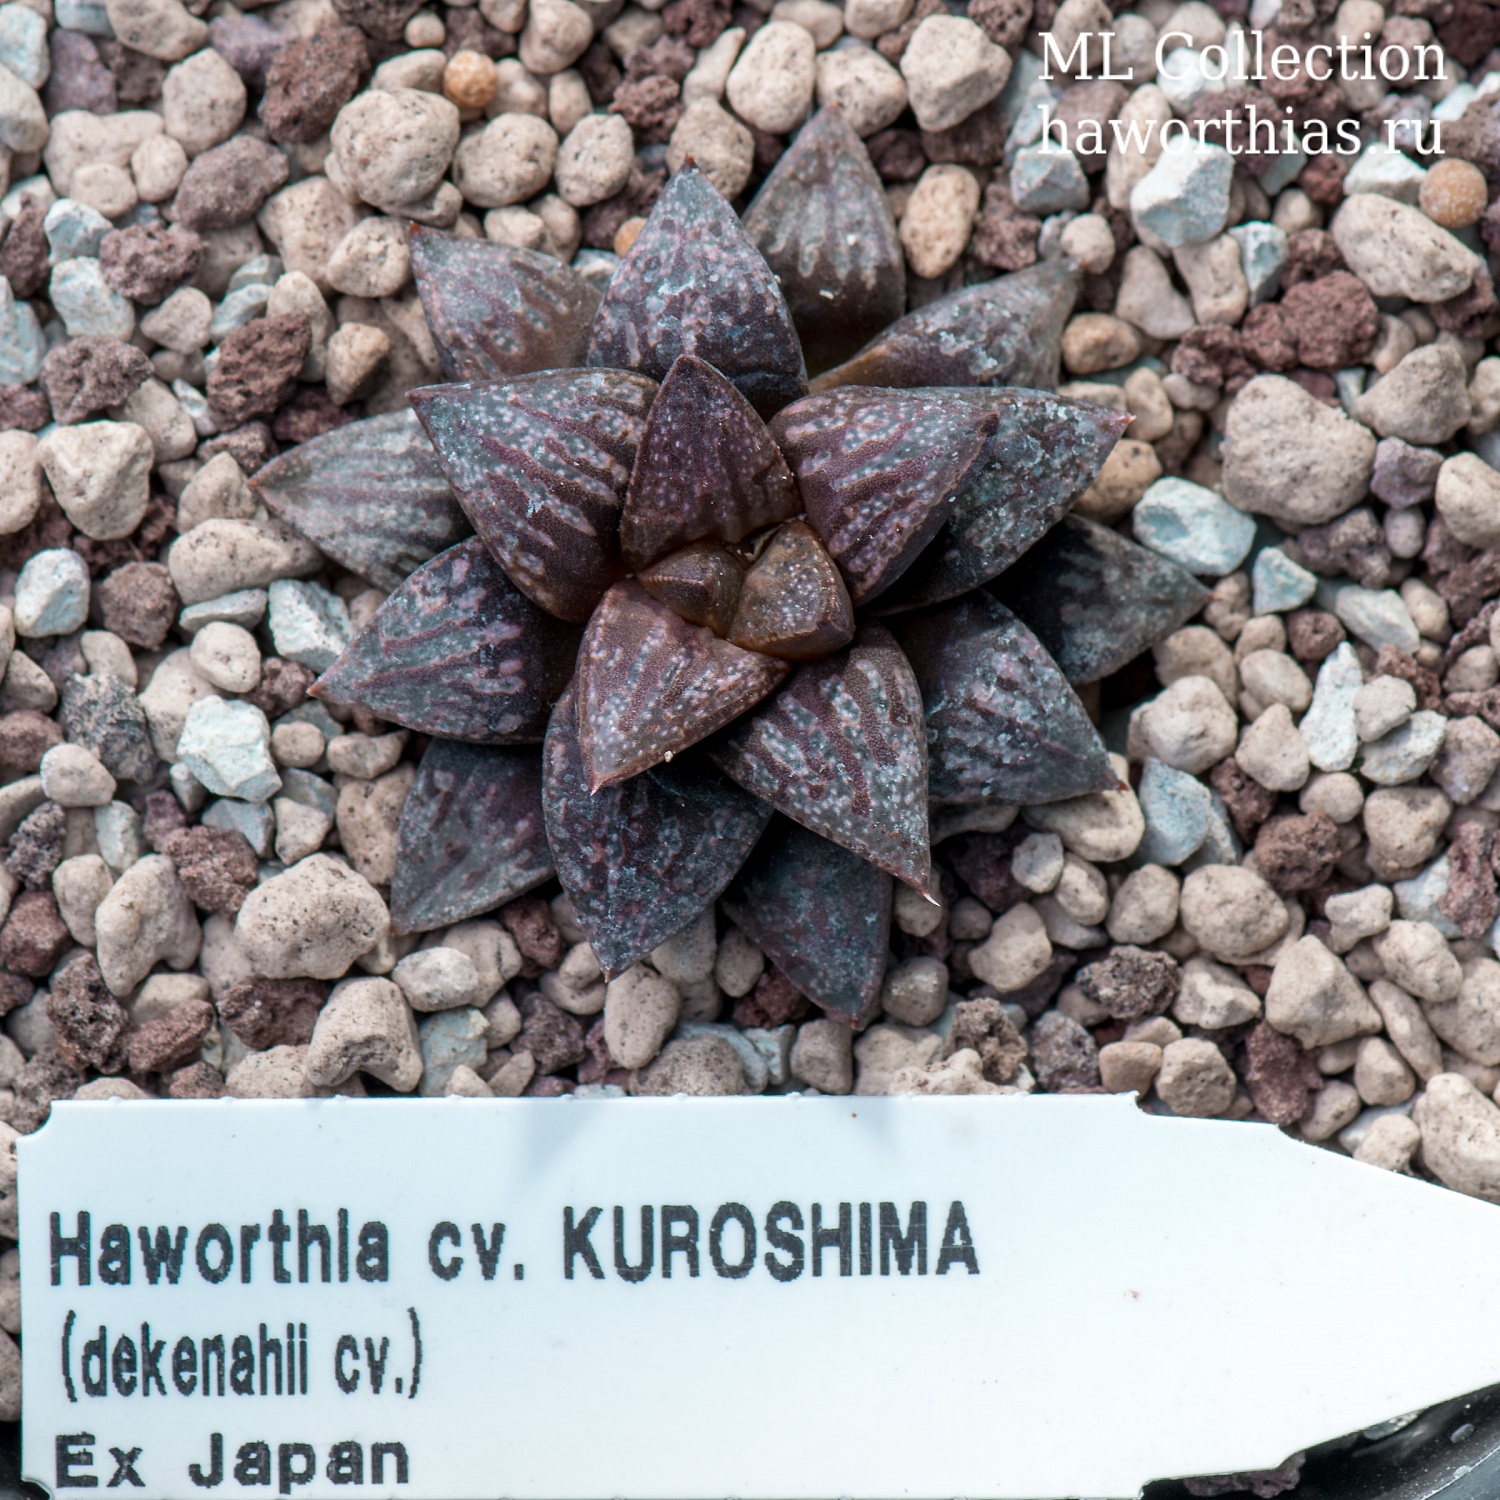 Haworthia picta - Частная коллекция суккулентов ML Collection